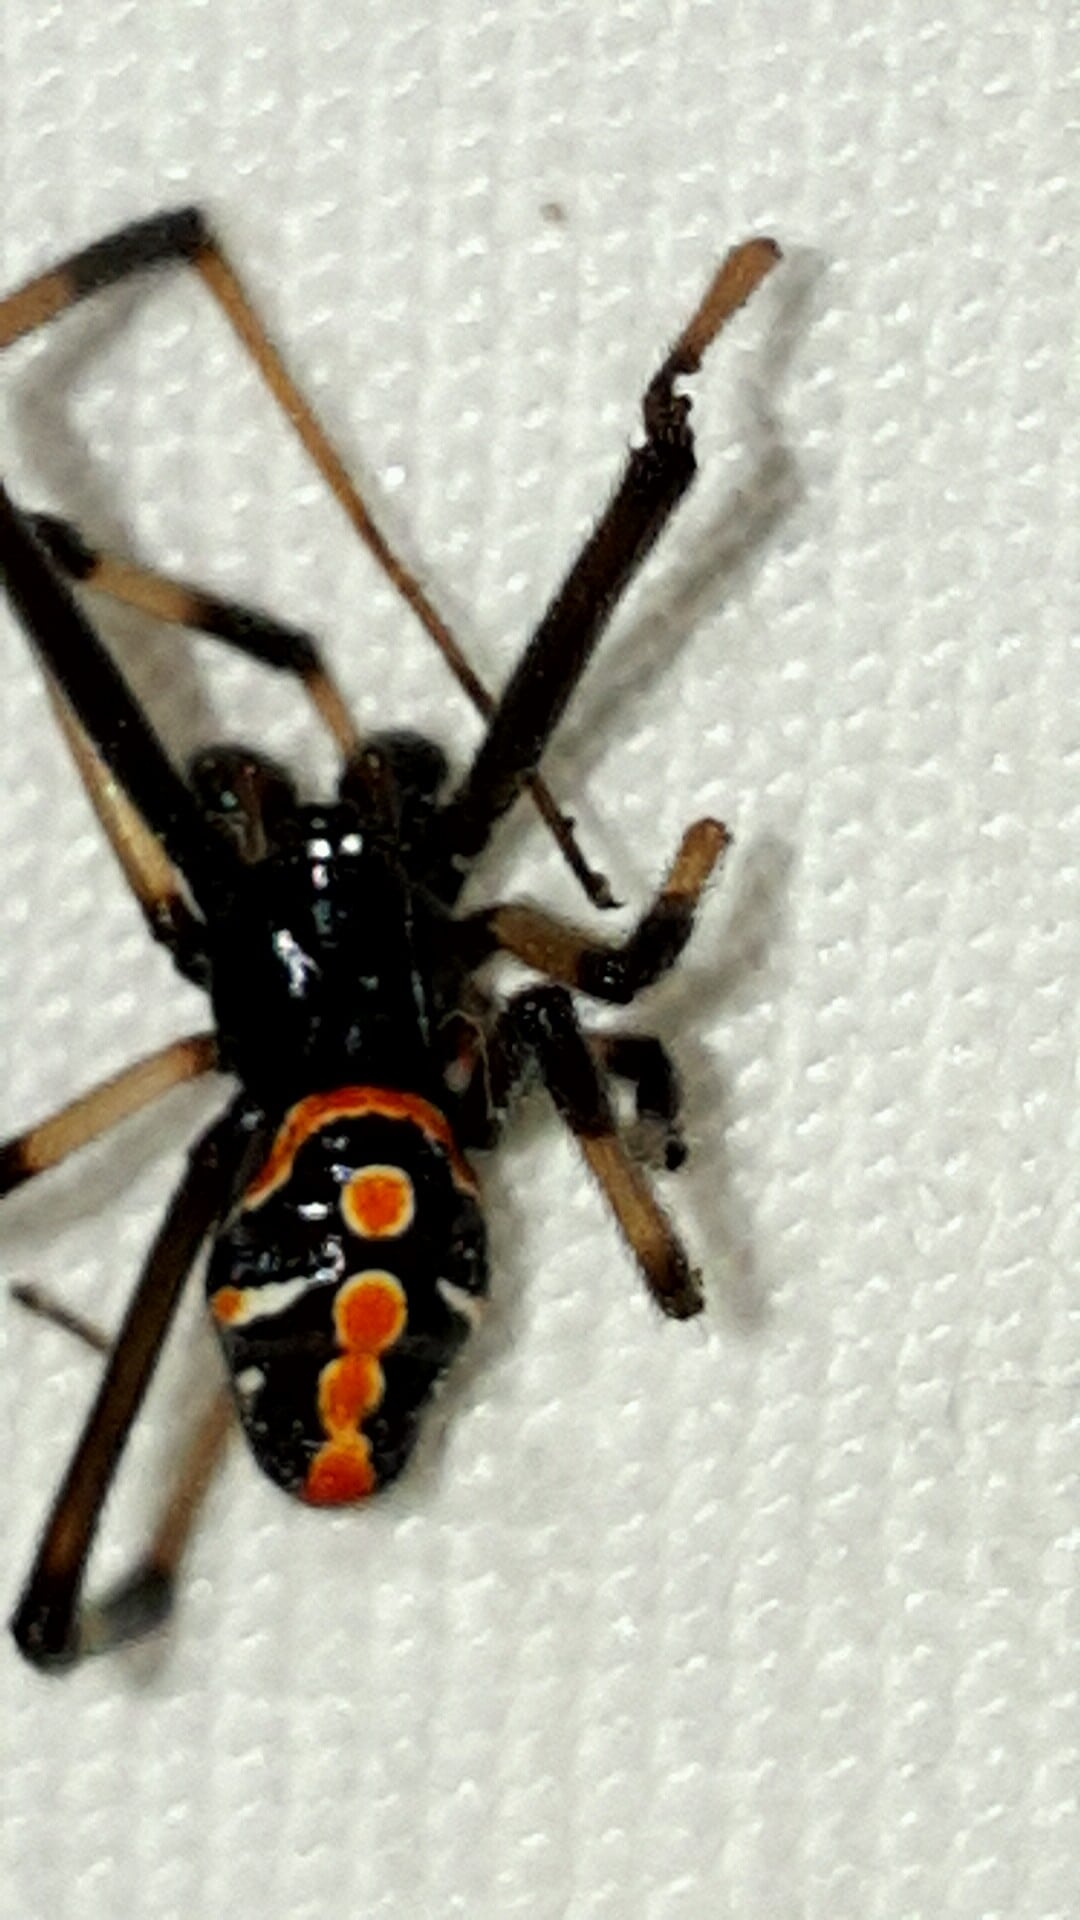 Picture of Latrodectus mactans (Southern Black Widow) - Male - Dorsal